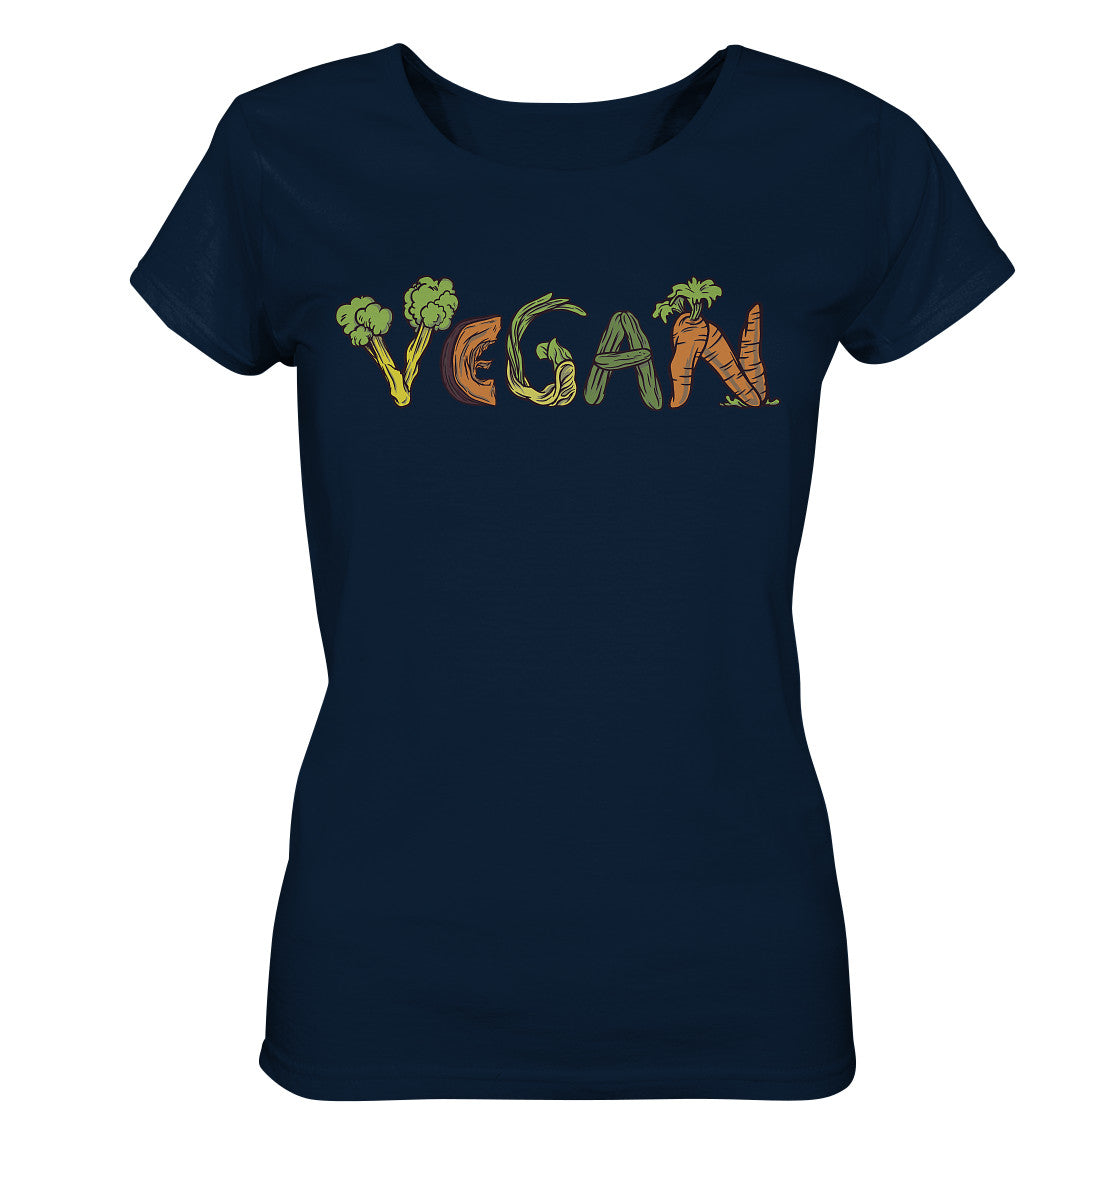 Vegan - Damen Bio Shirt